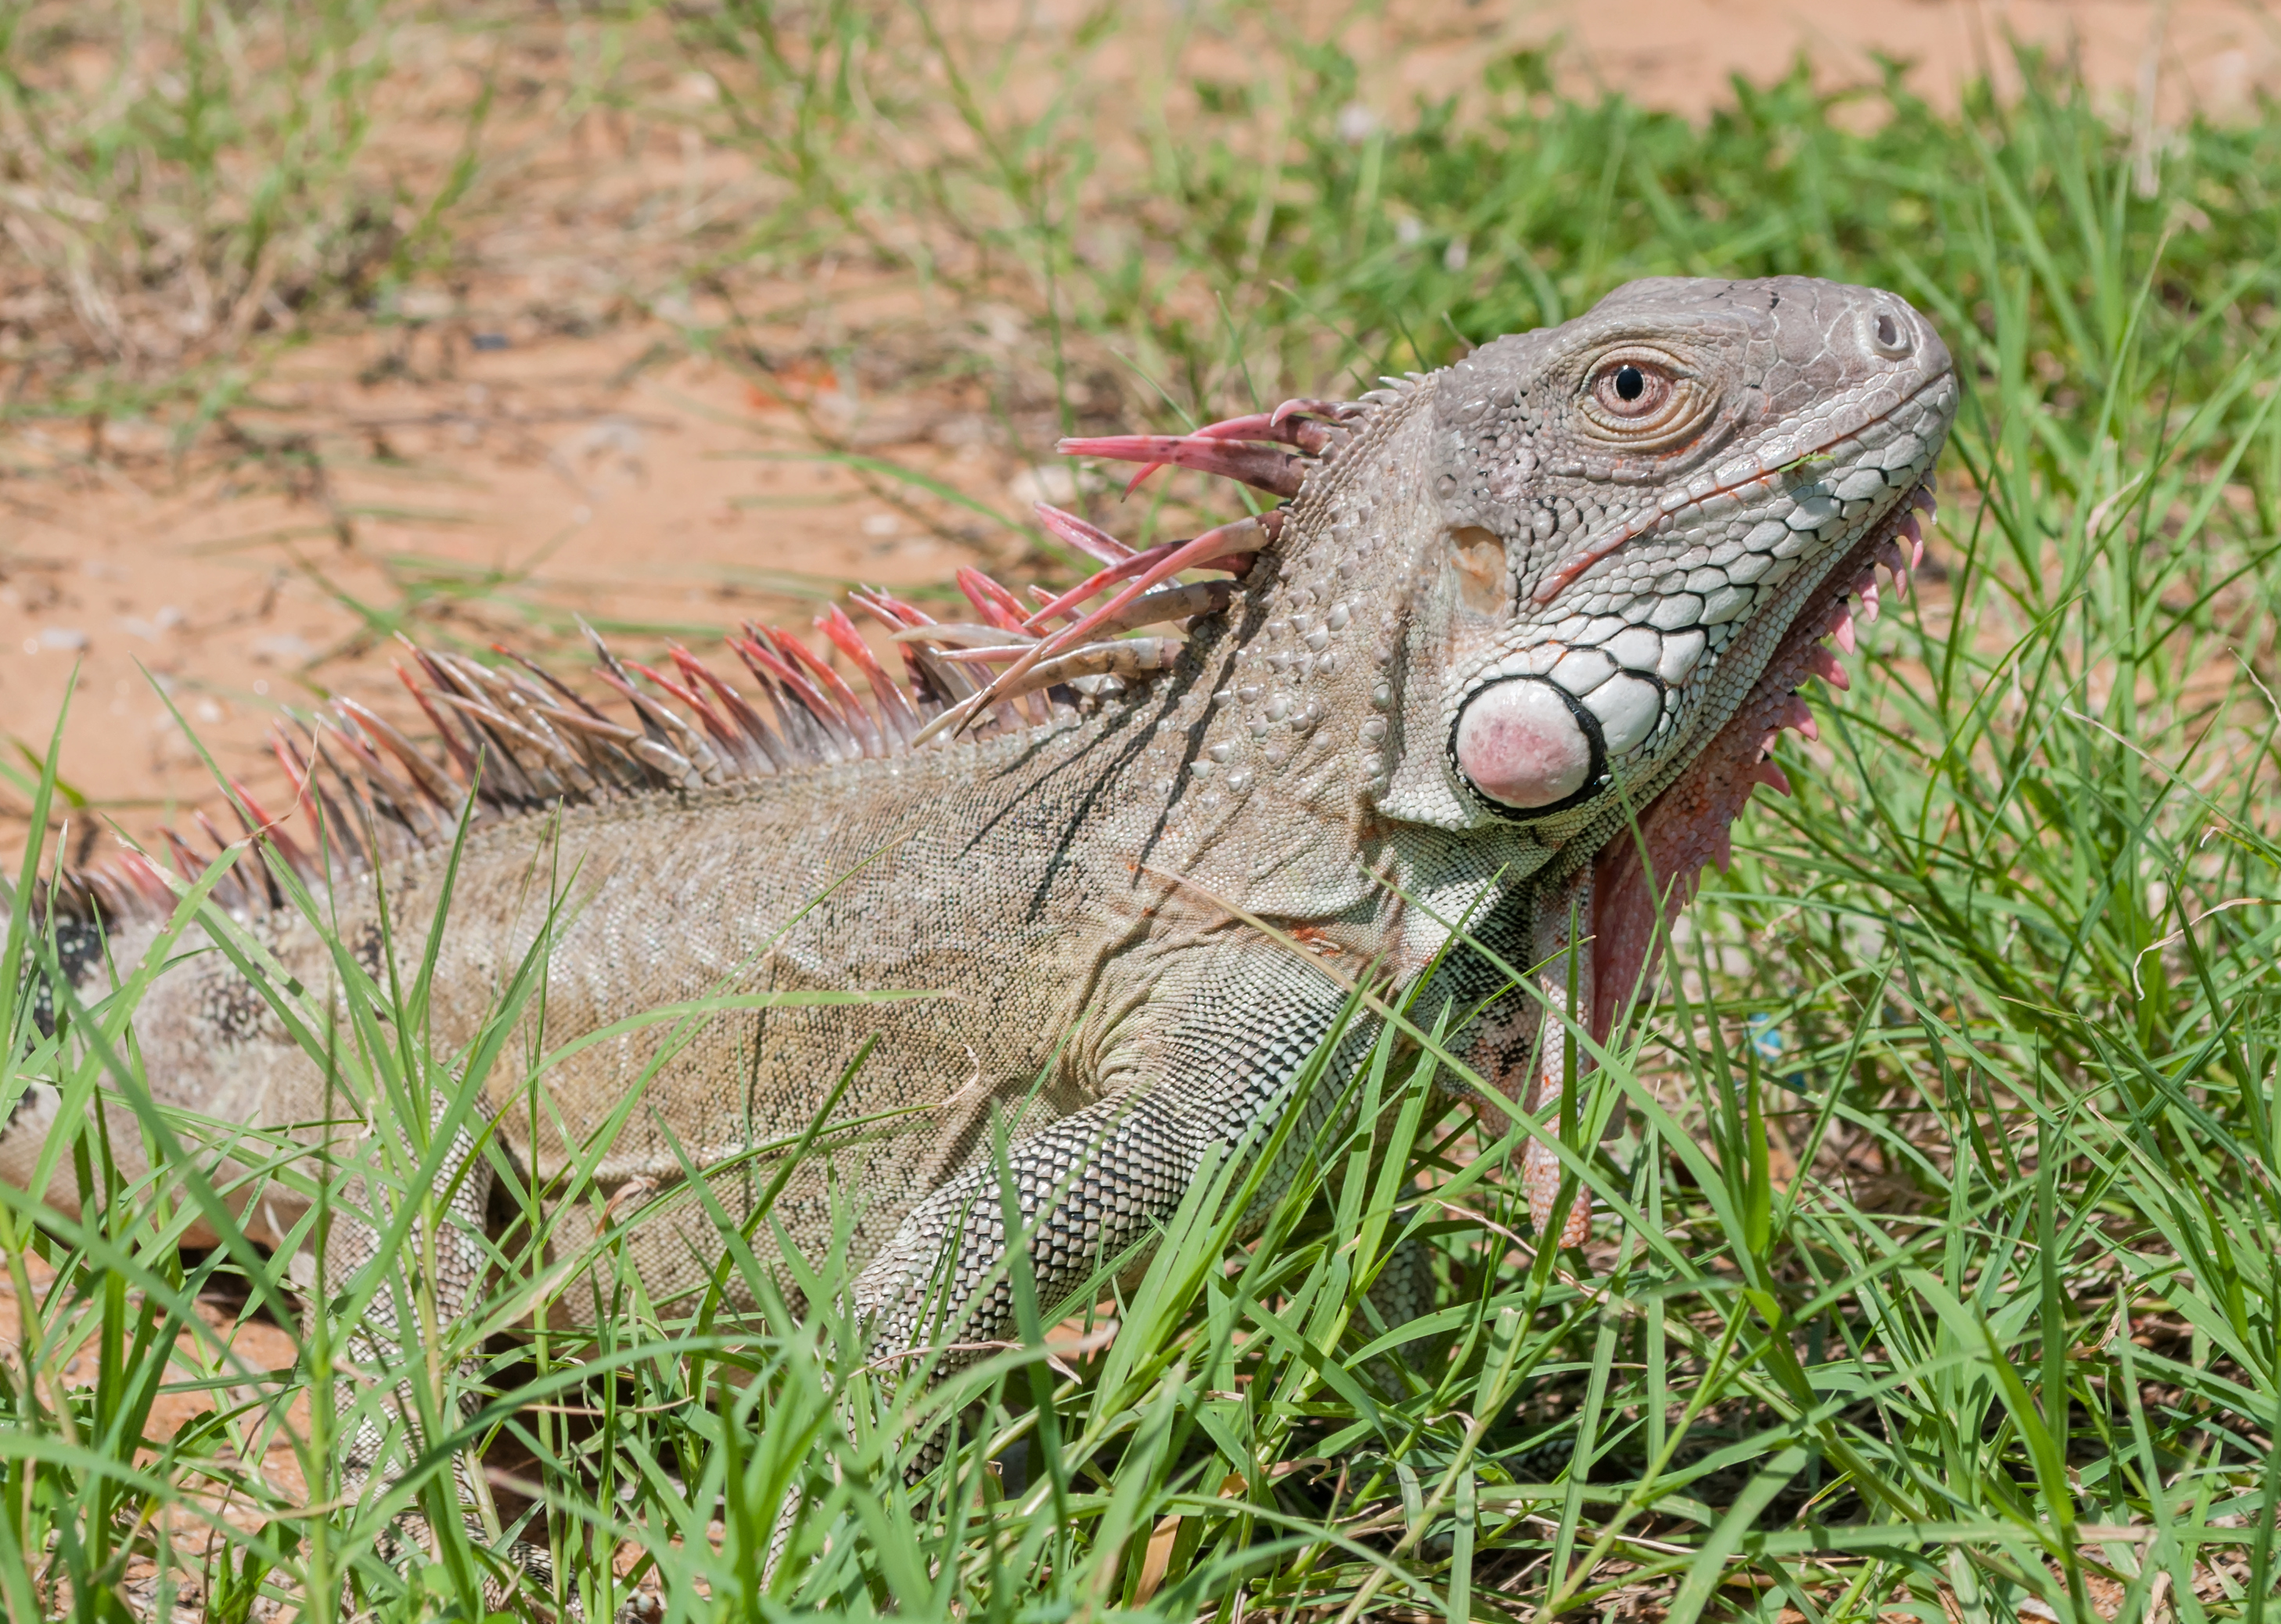 File:Iguana in the Maracaibo wild.jpg - Wikimedia Commons